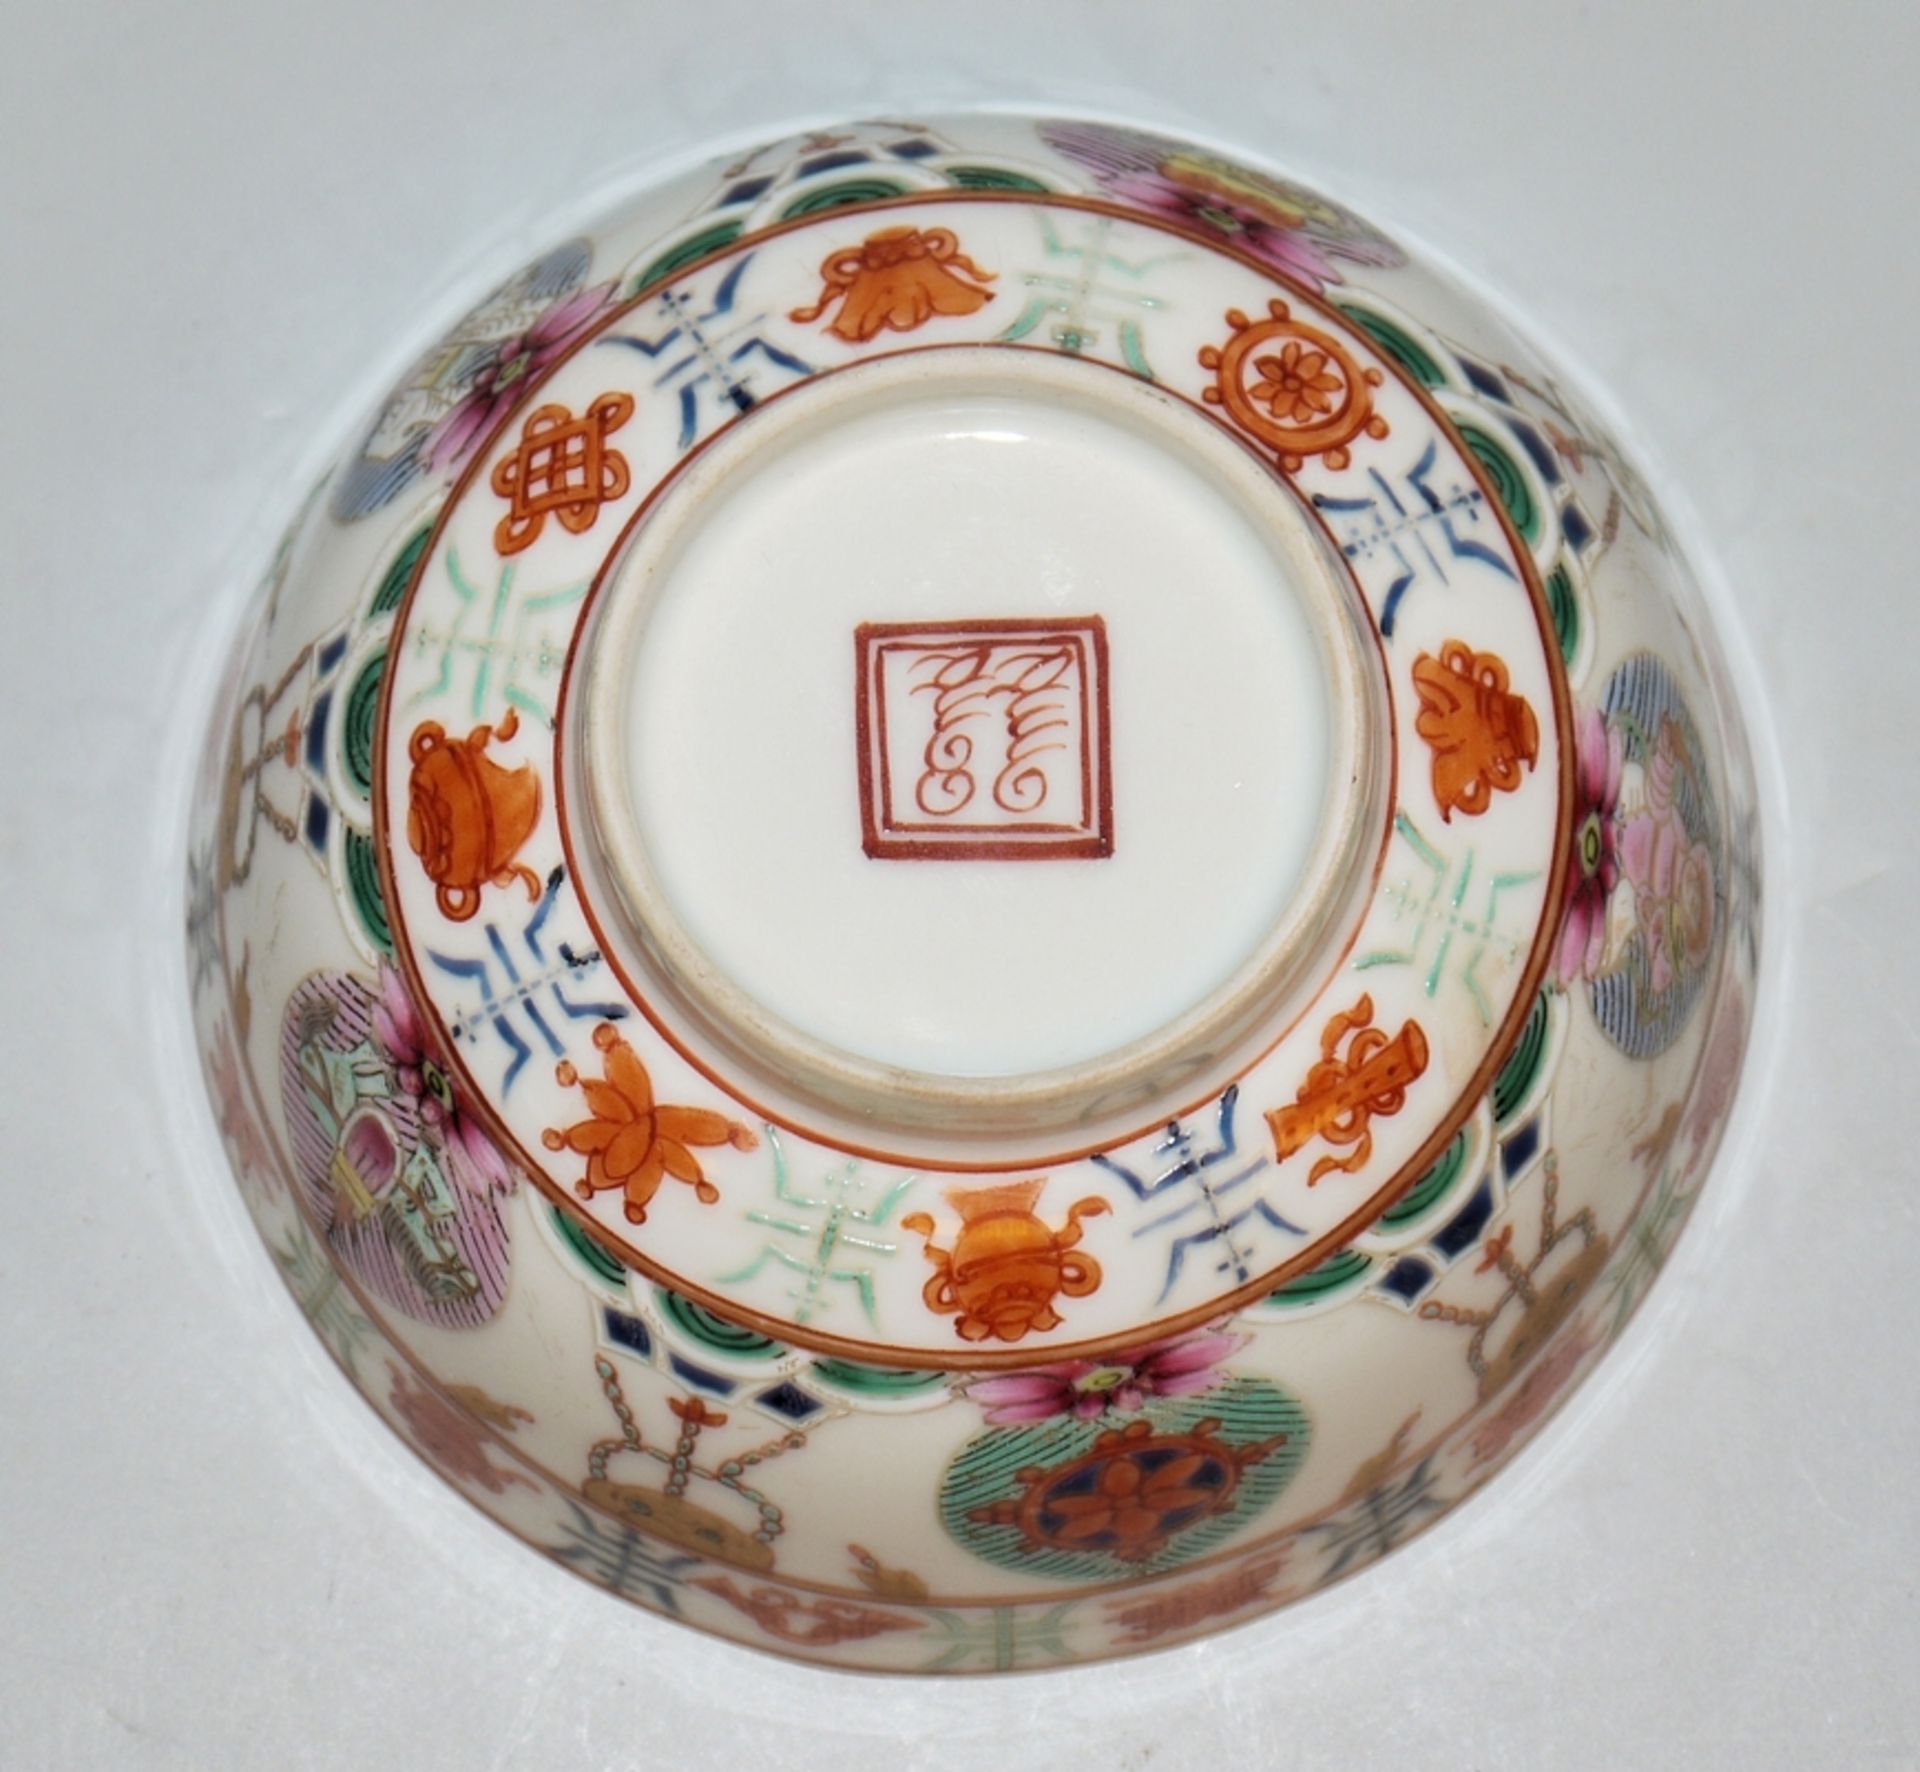 Food bowl with Buddhist symbolism, China 20th century - Image 4 of 4